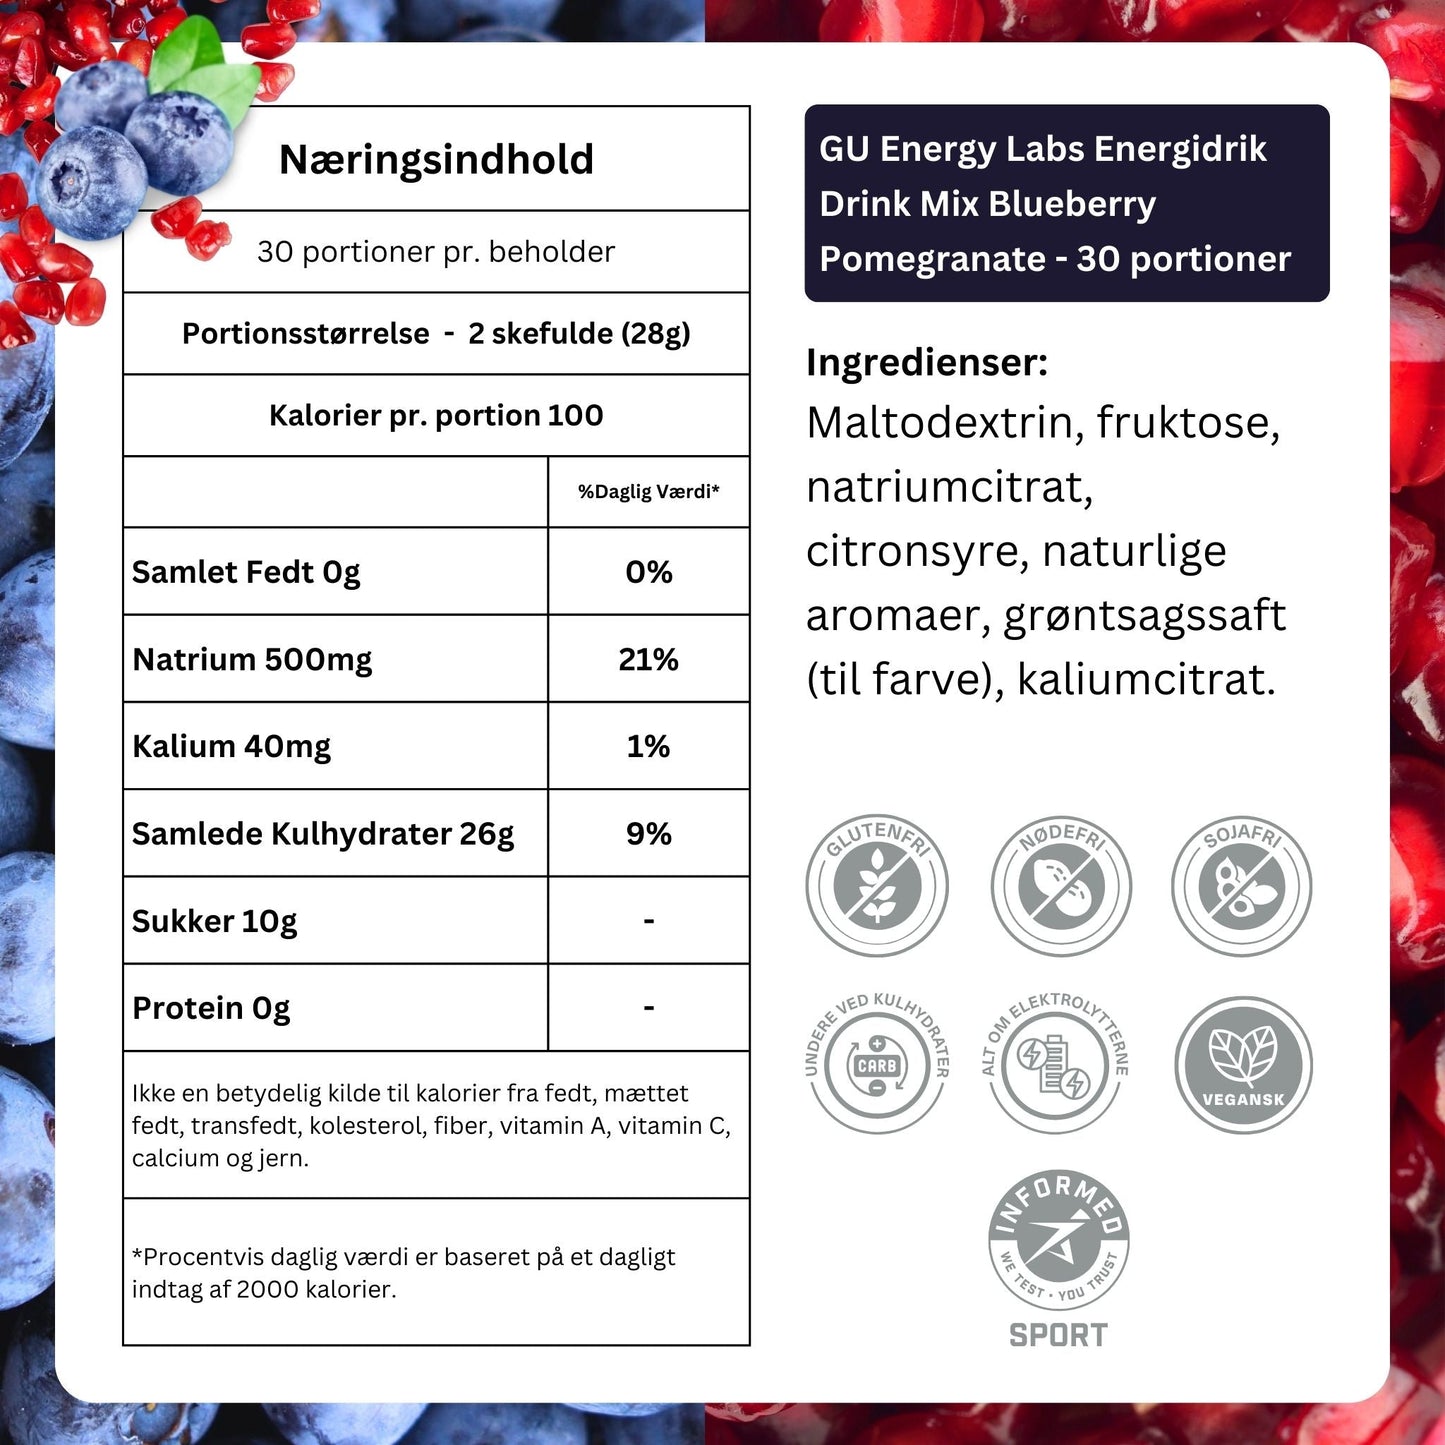 GU Energy Labs Energidrik Drink Mix Blueberry Pomegranate - 30 portioner - Danish Ingredients